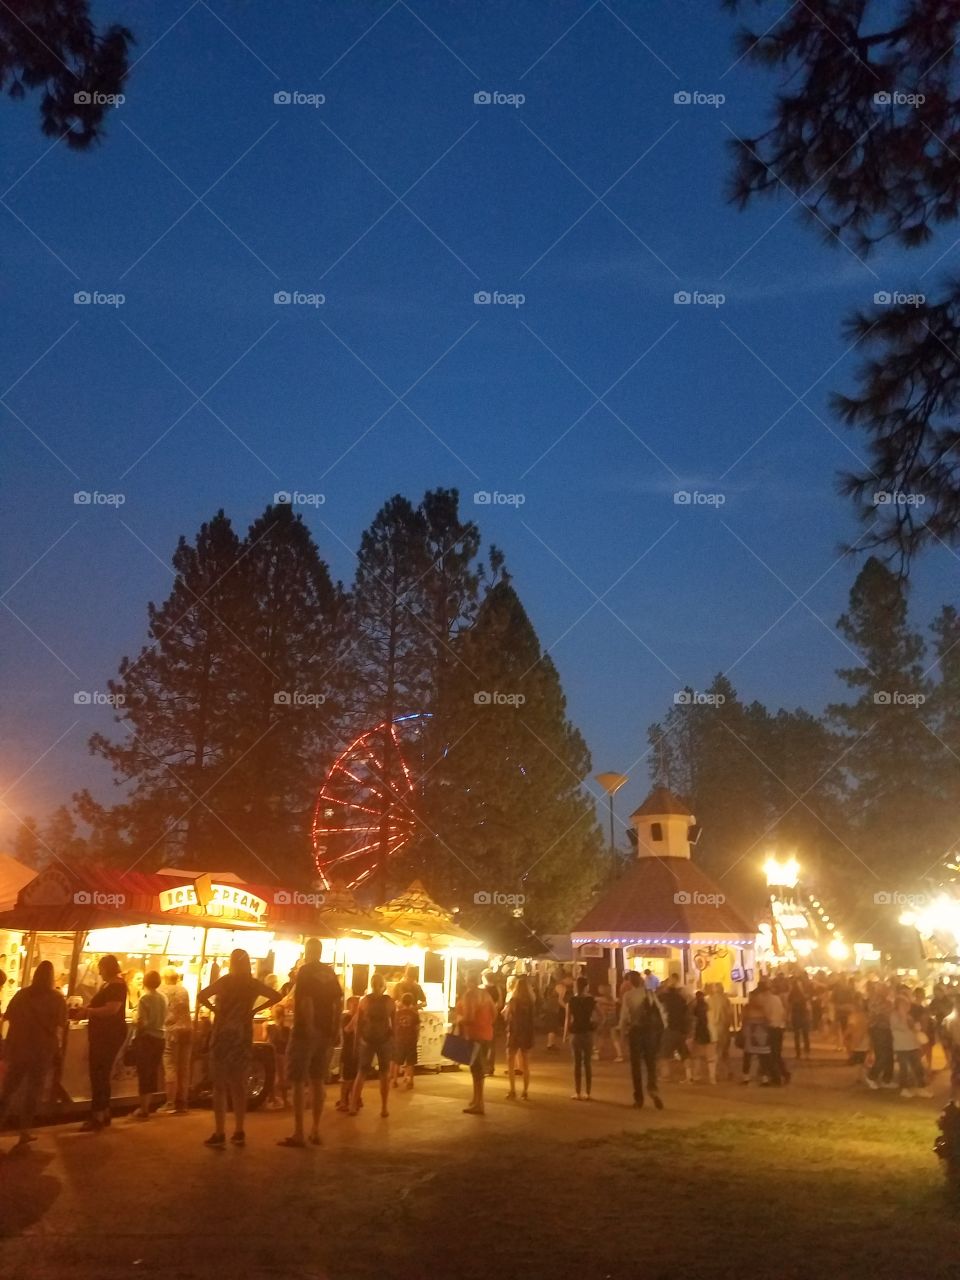 A Night at the Fair